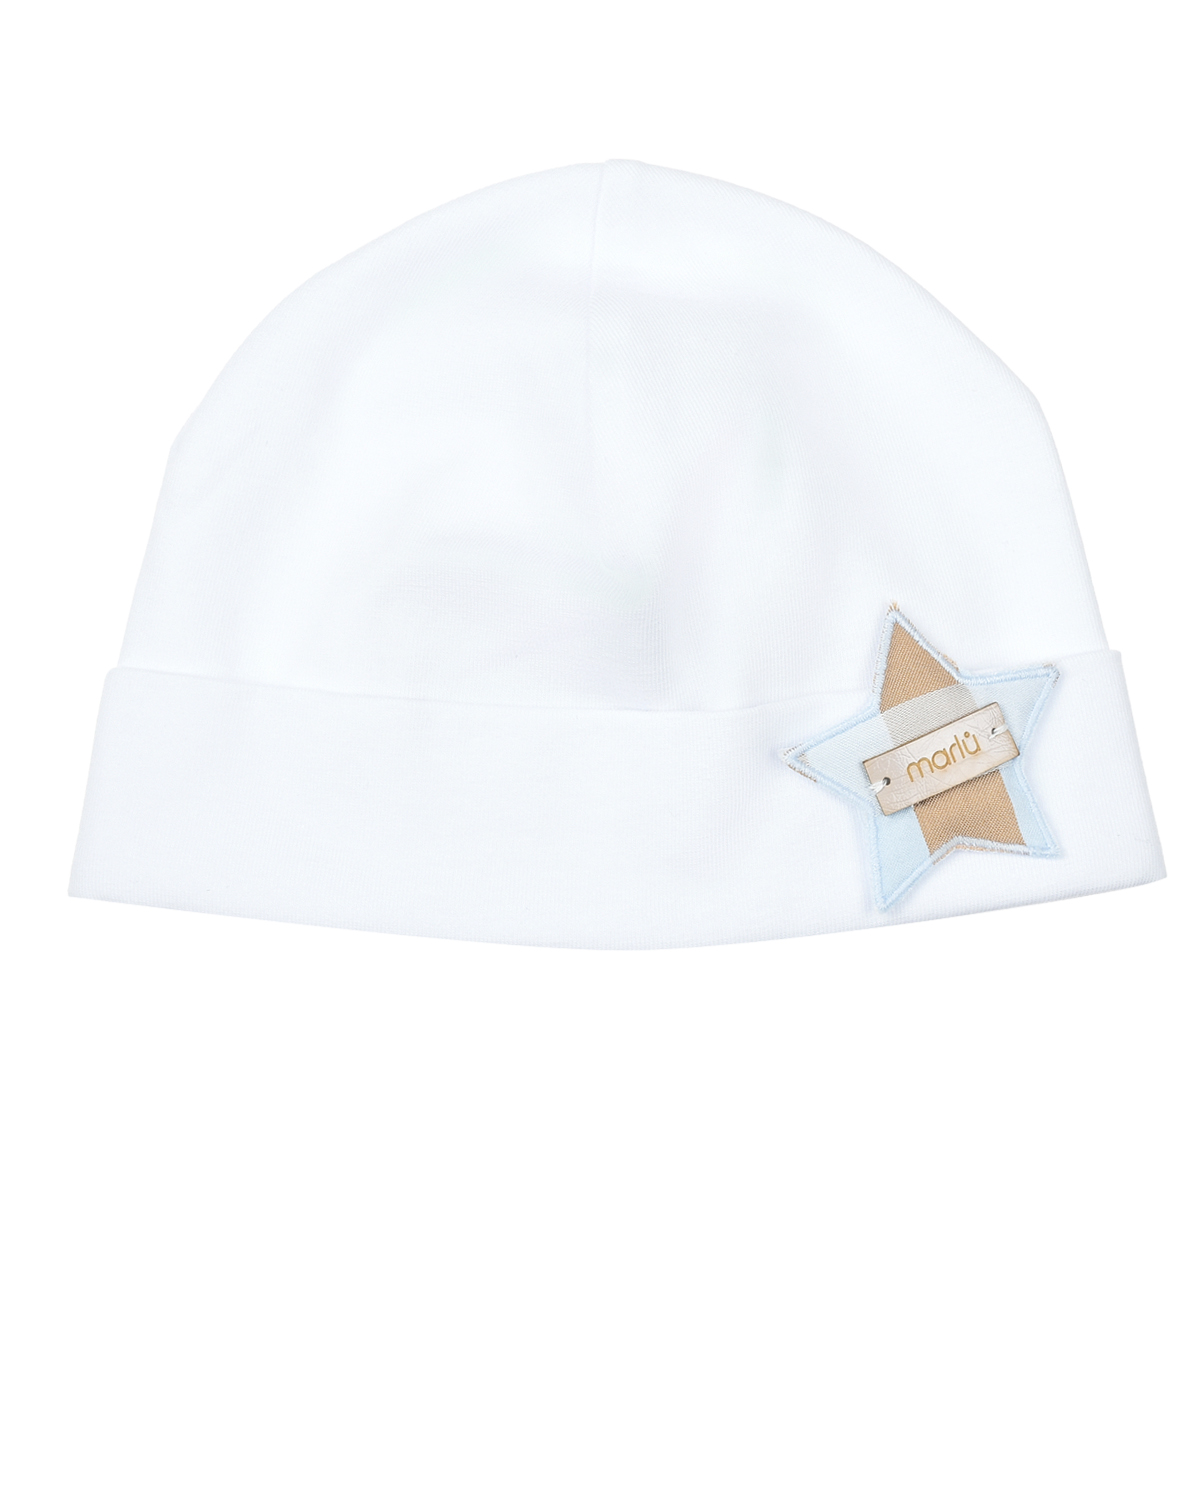 Белая шапка с нашивкой "звезда" Marlu, размер 56, цвет белый